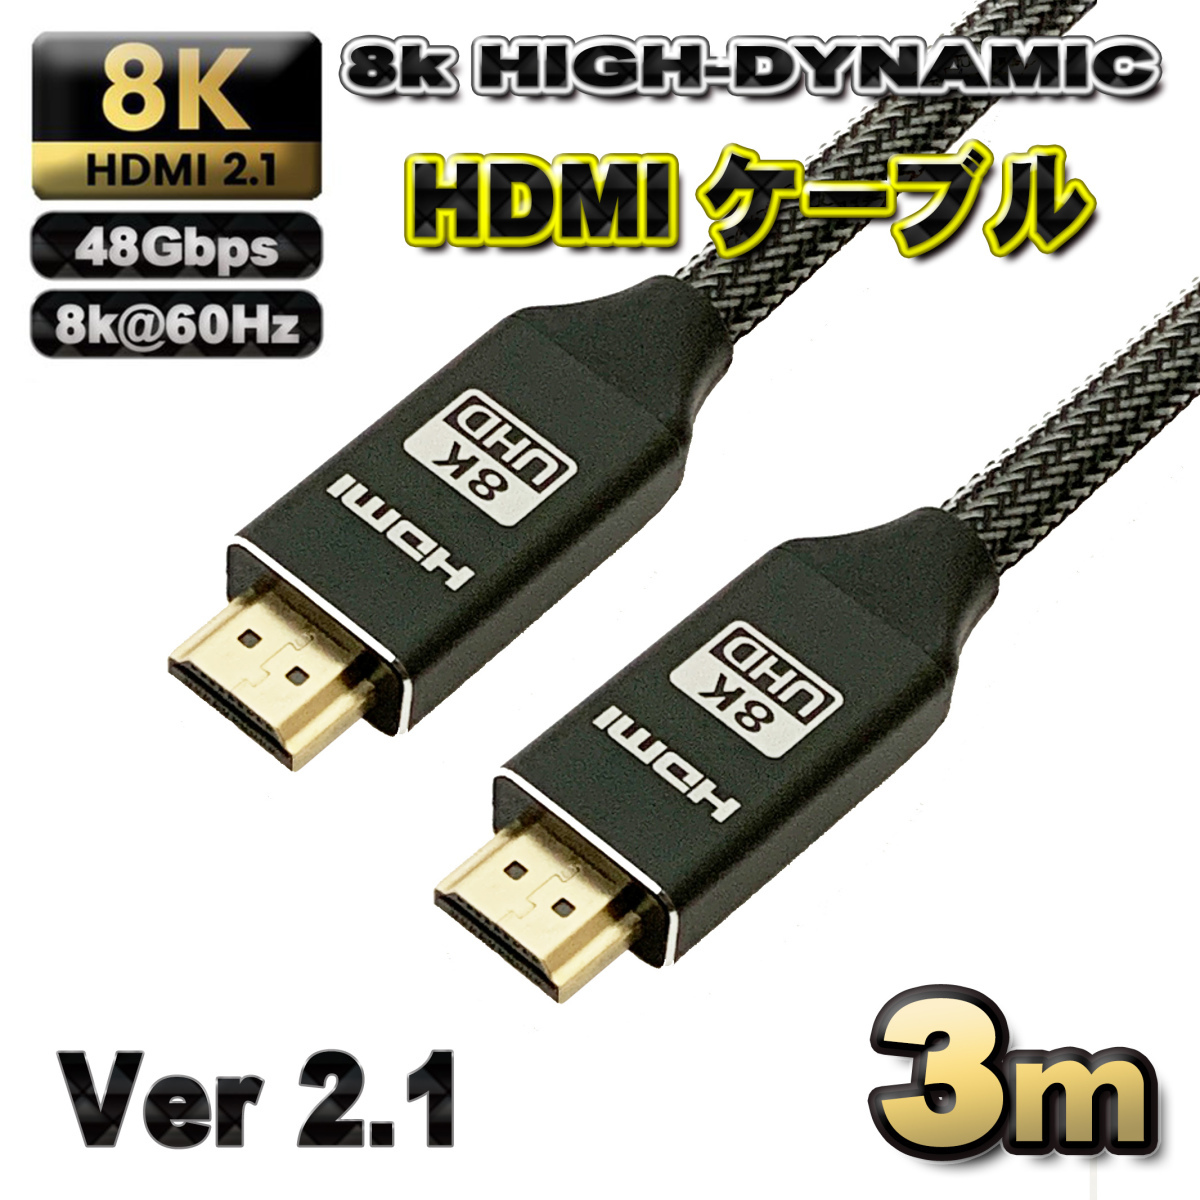 【8K・高耐久ケーブルTYPE】HDMI ケーブル 3m 8K HDMI2.1 ケーブル 48Gbps 対応 Ver2.1 フルハイビジョン 8K イーサネット対応_画像1